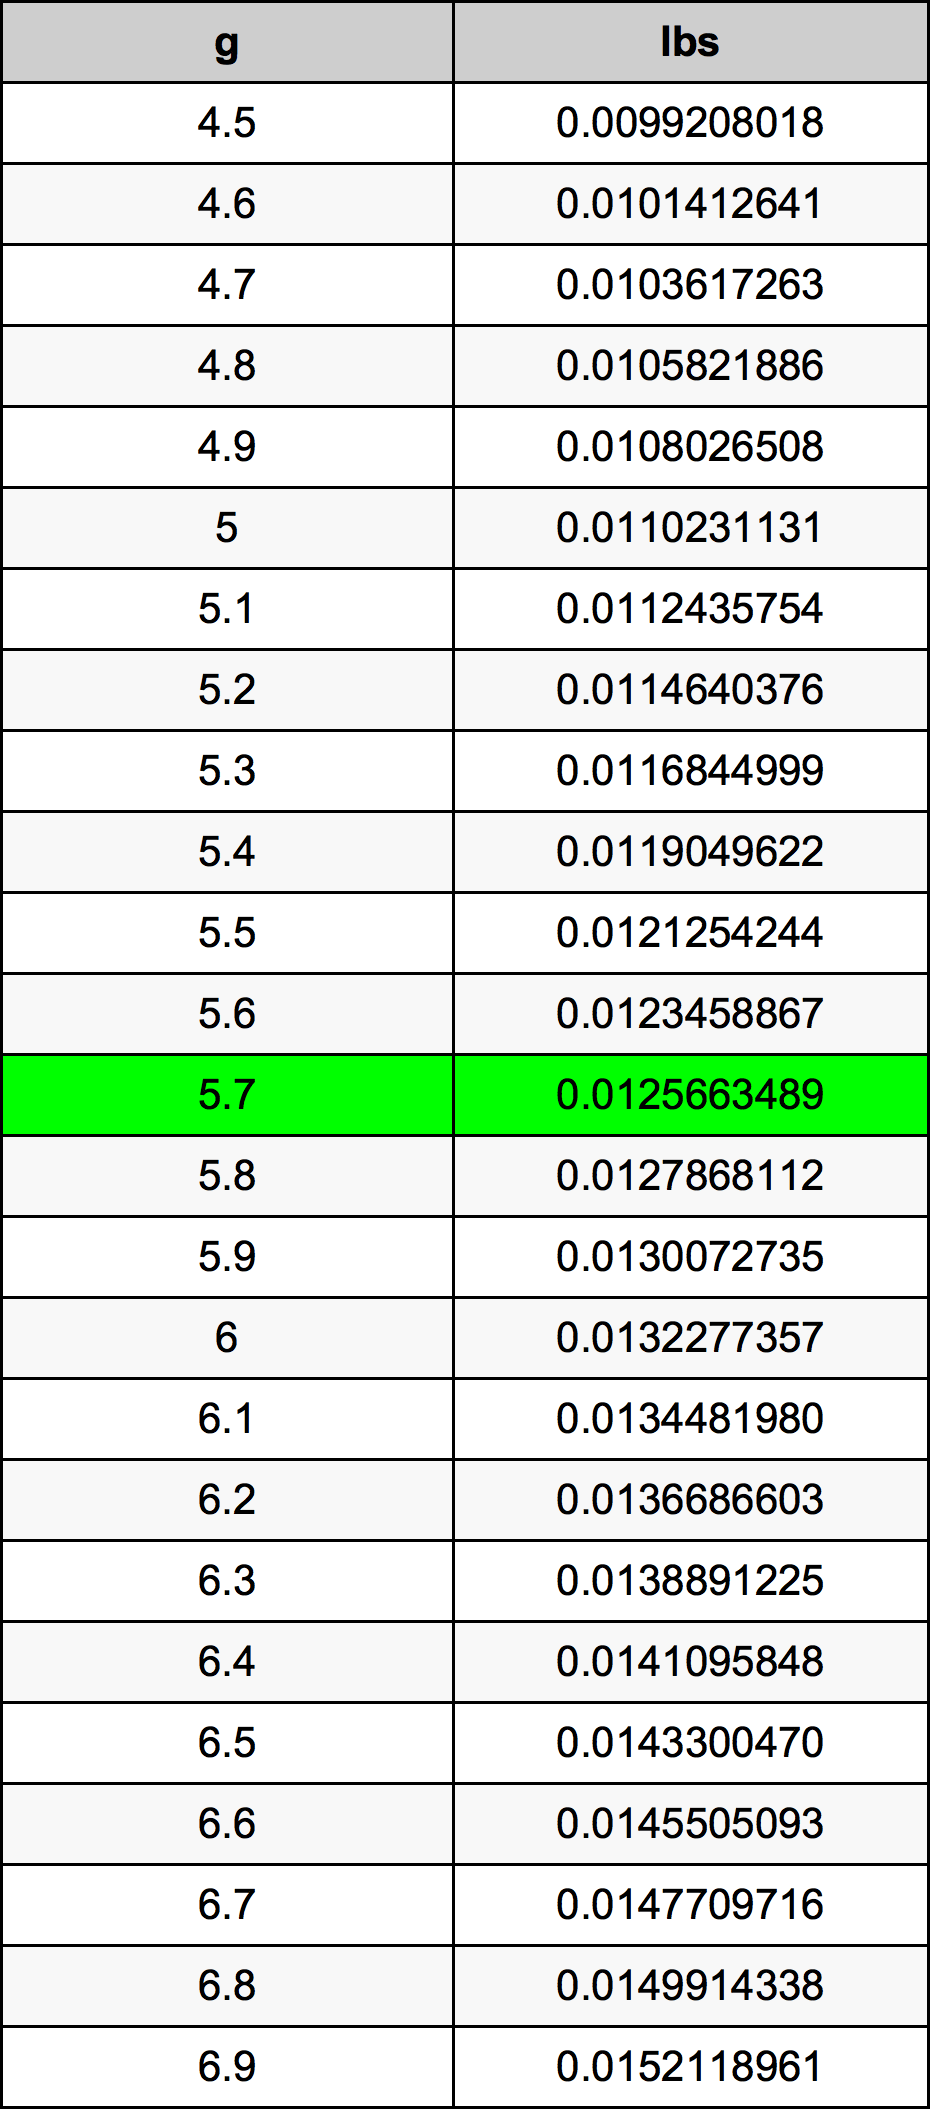 5.7 غرام جدول تحويل